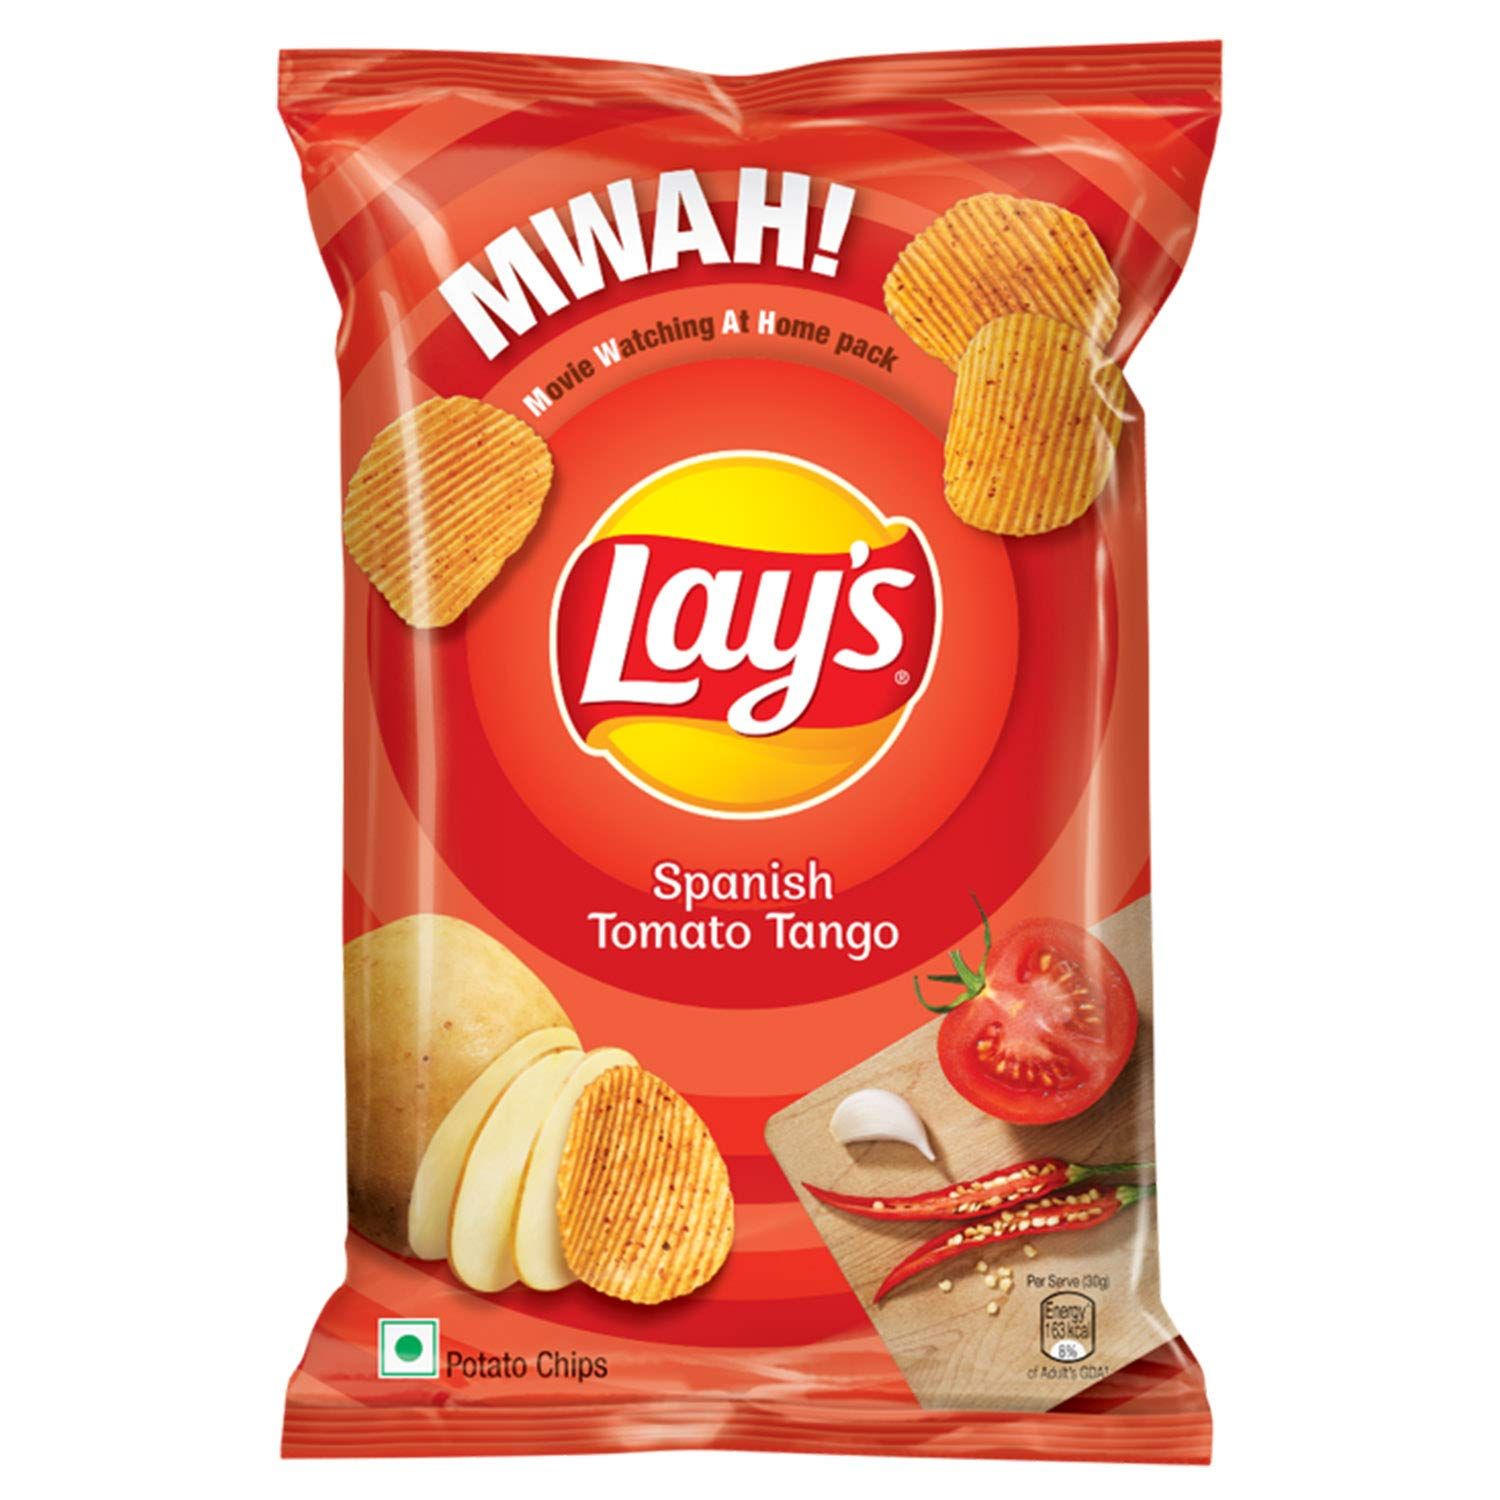 Lay's Potato Chips Spanish Tomato Tango Image